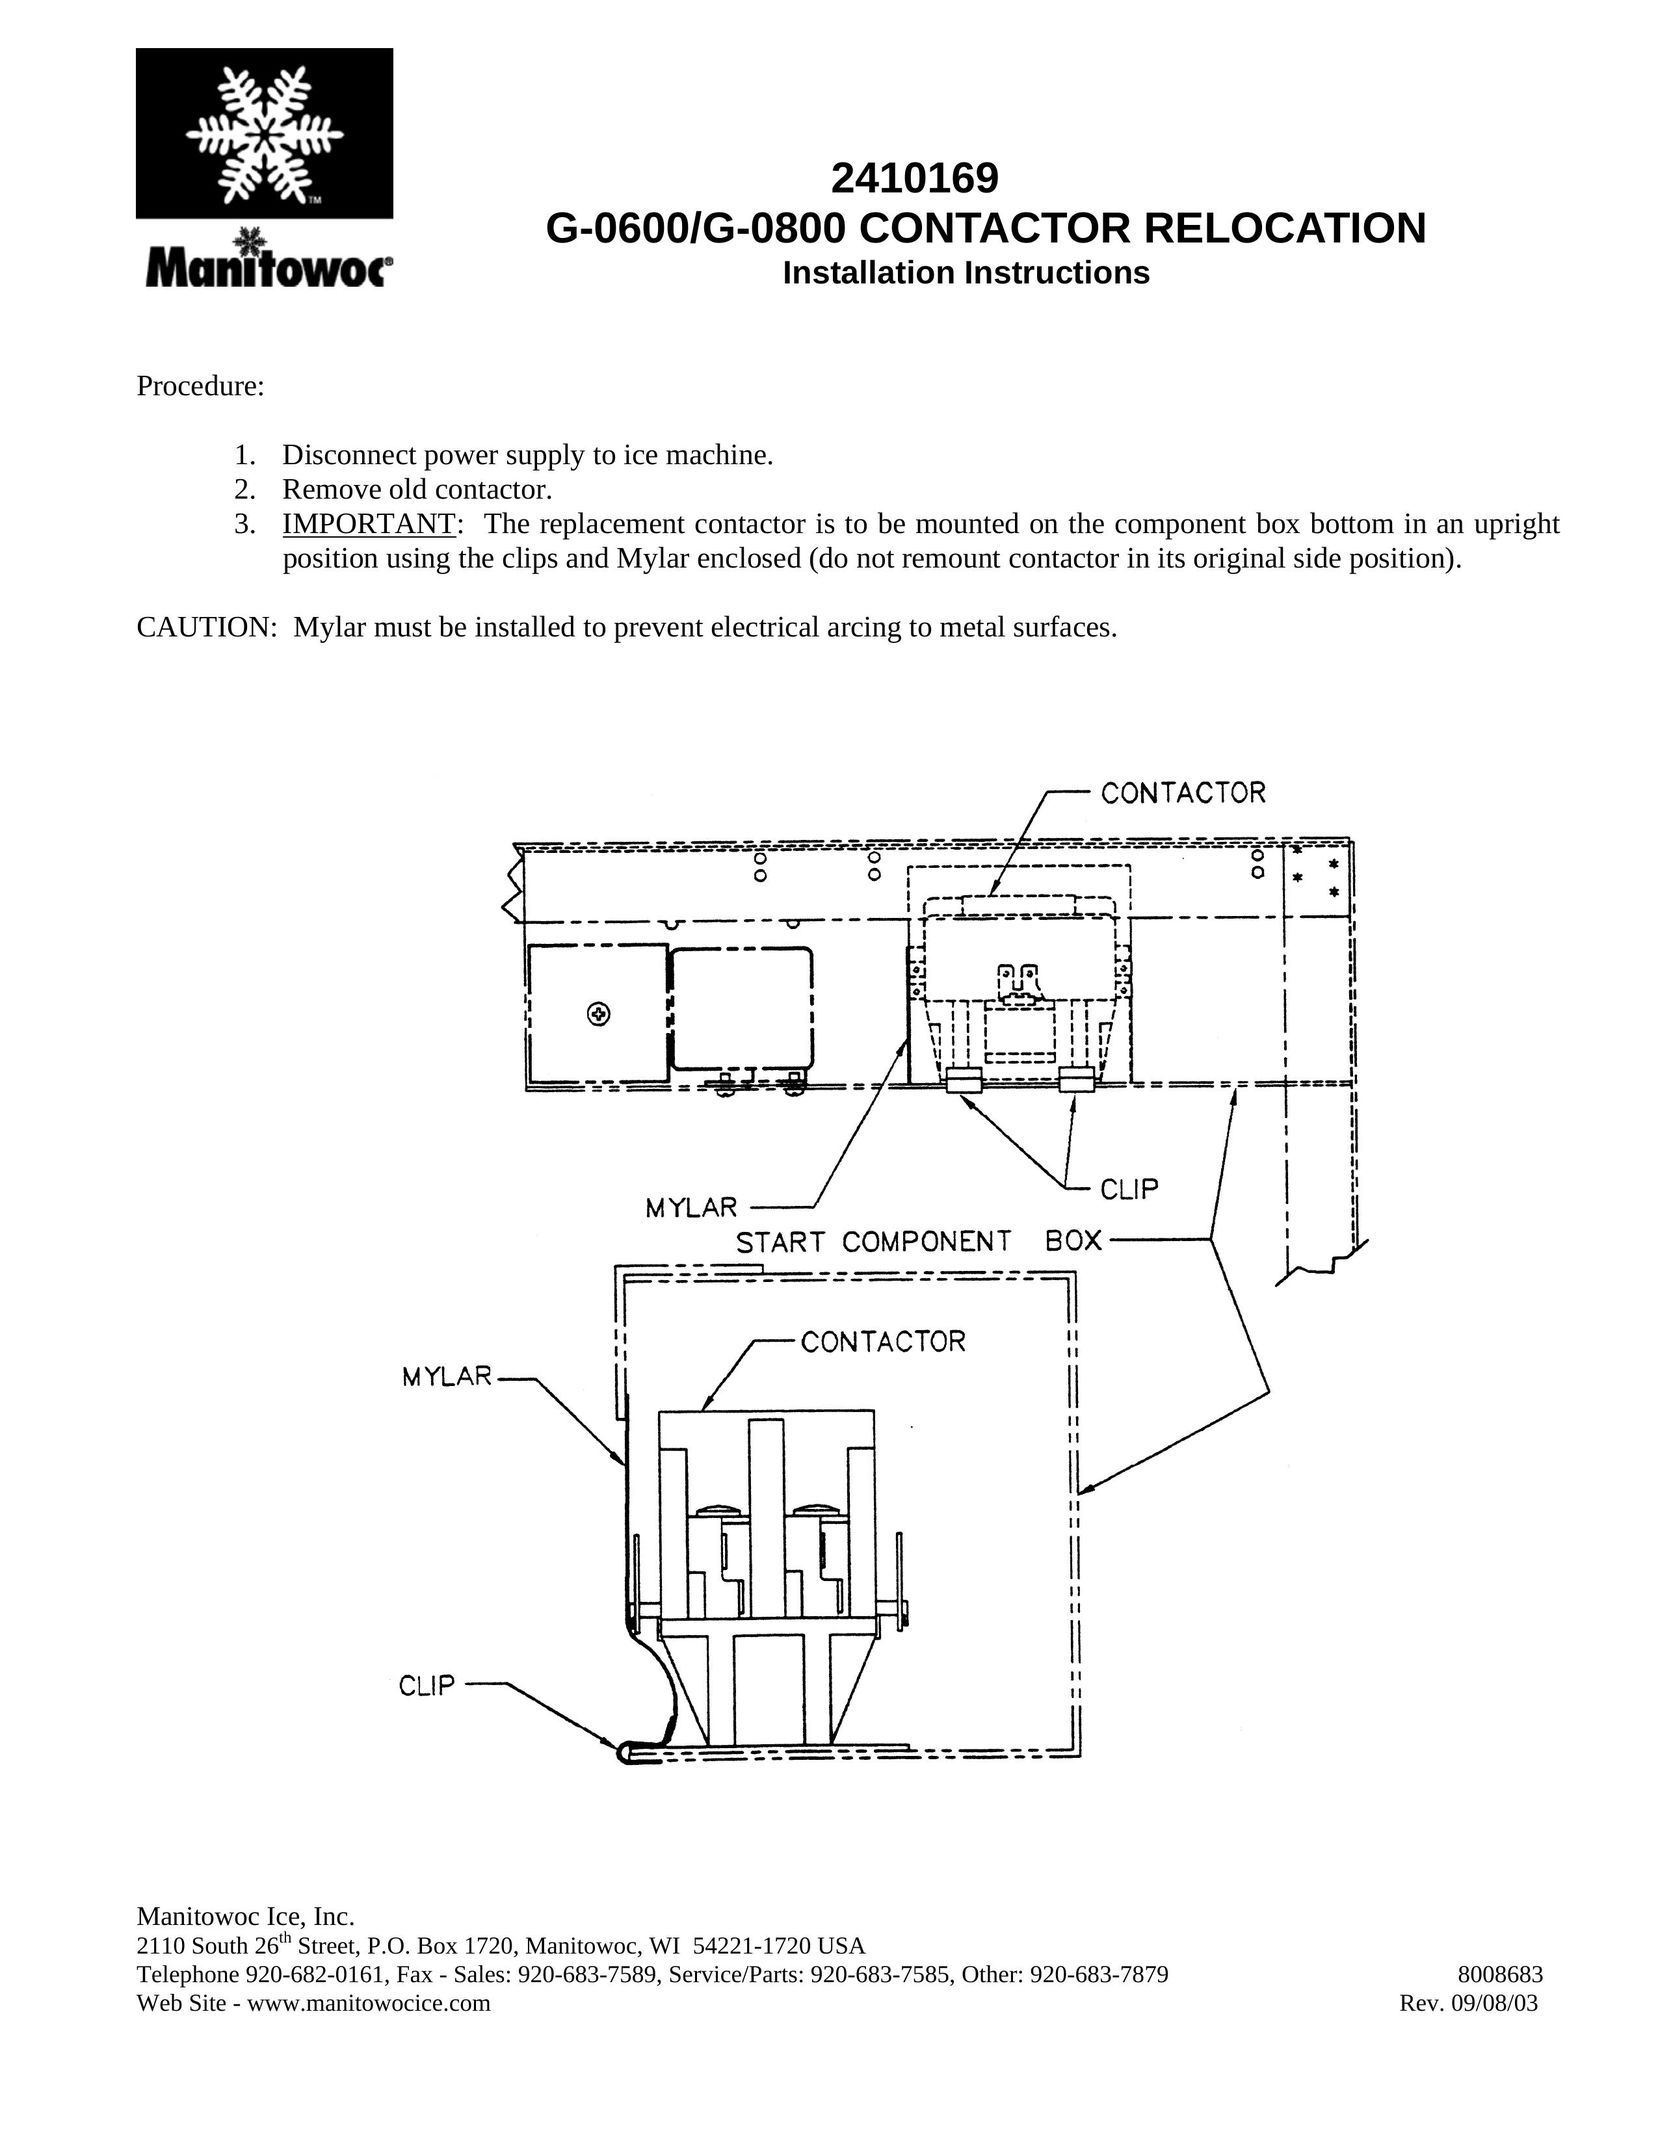 Manitowoc Ice G-0600 Air Compressor User Manual